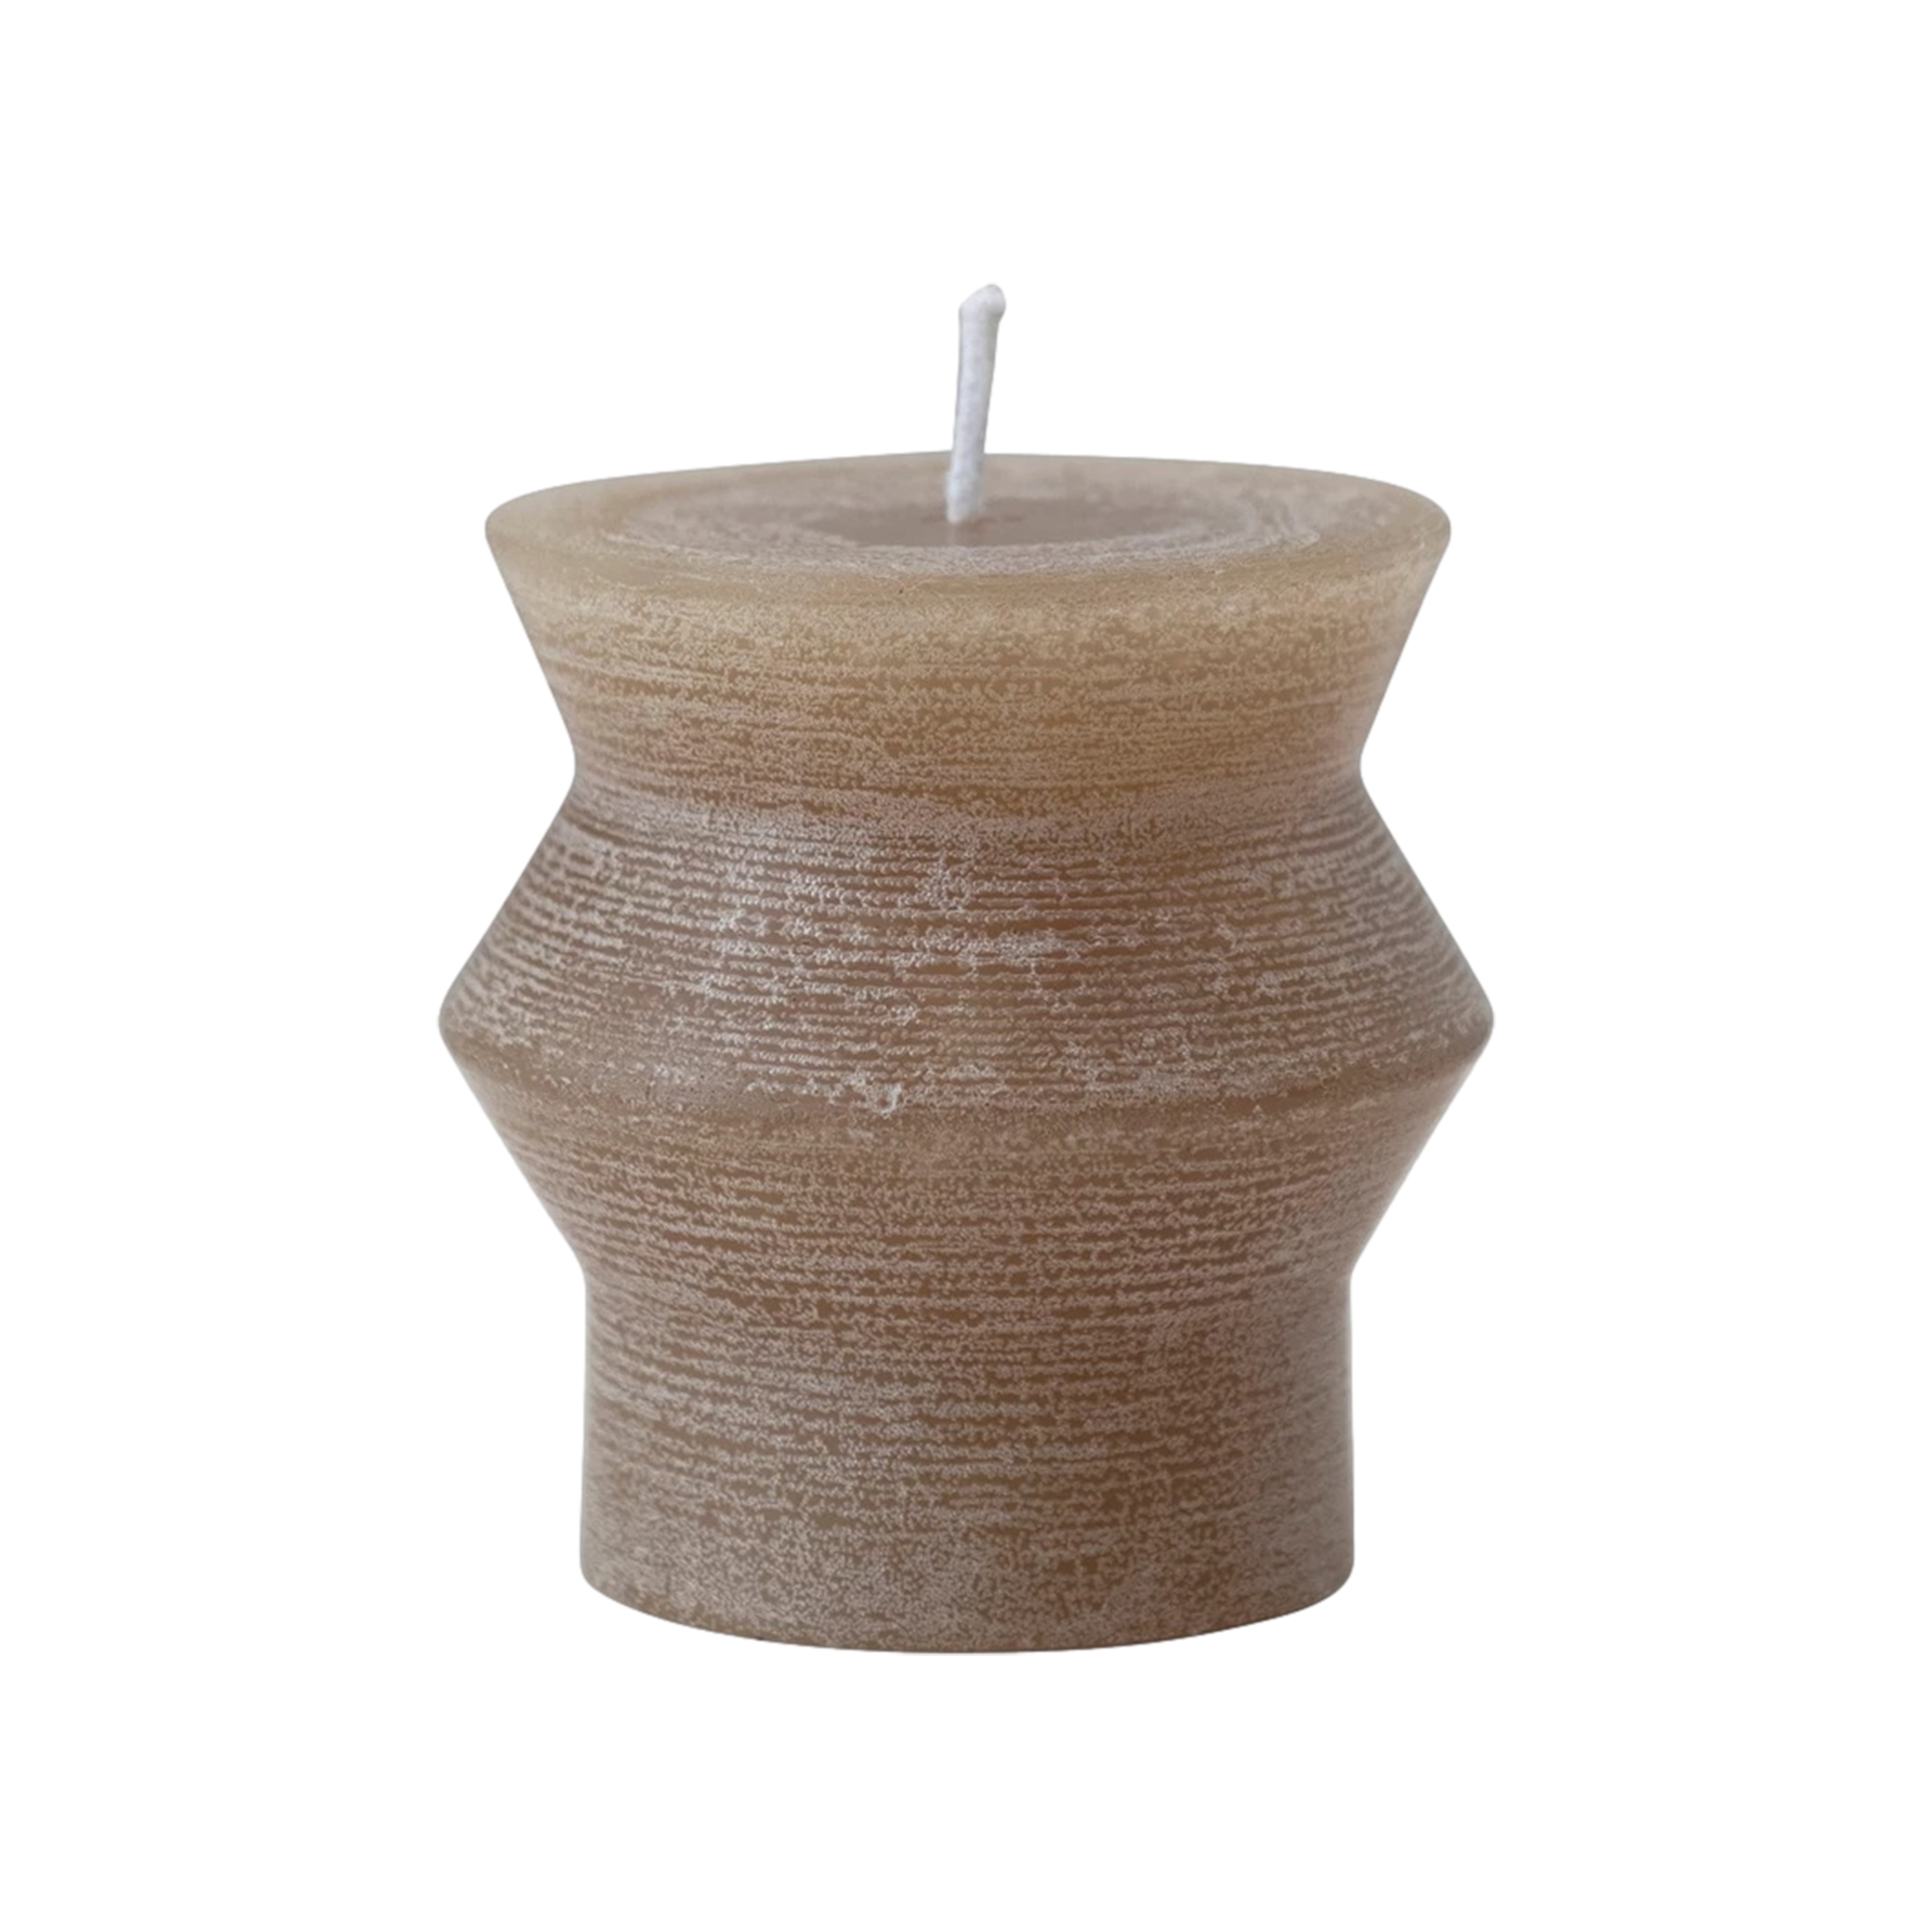 Totem Pillar Candle in Brown